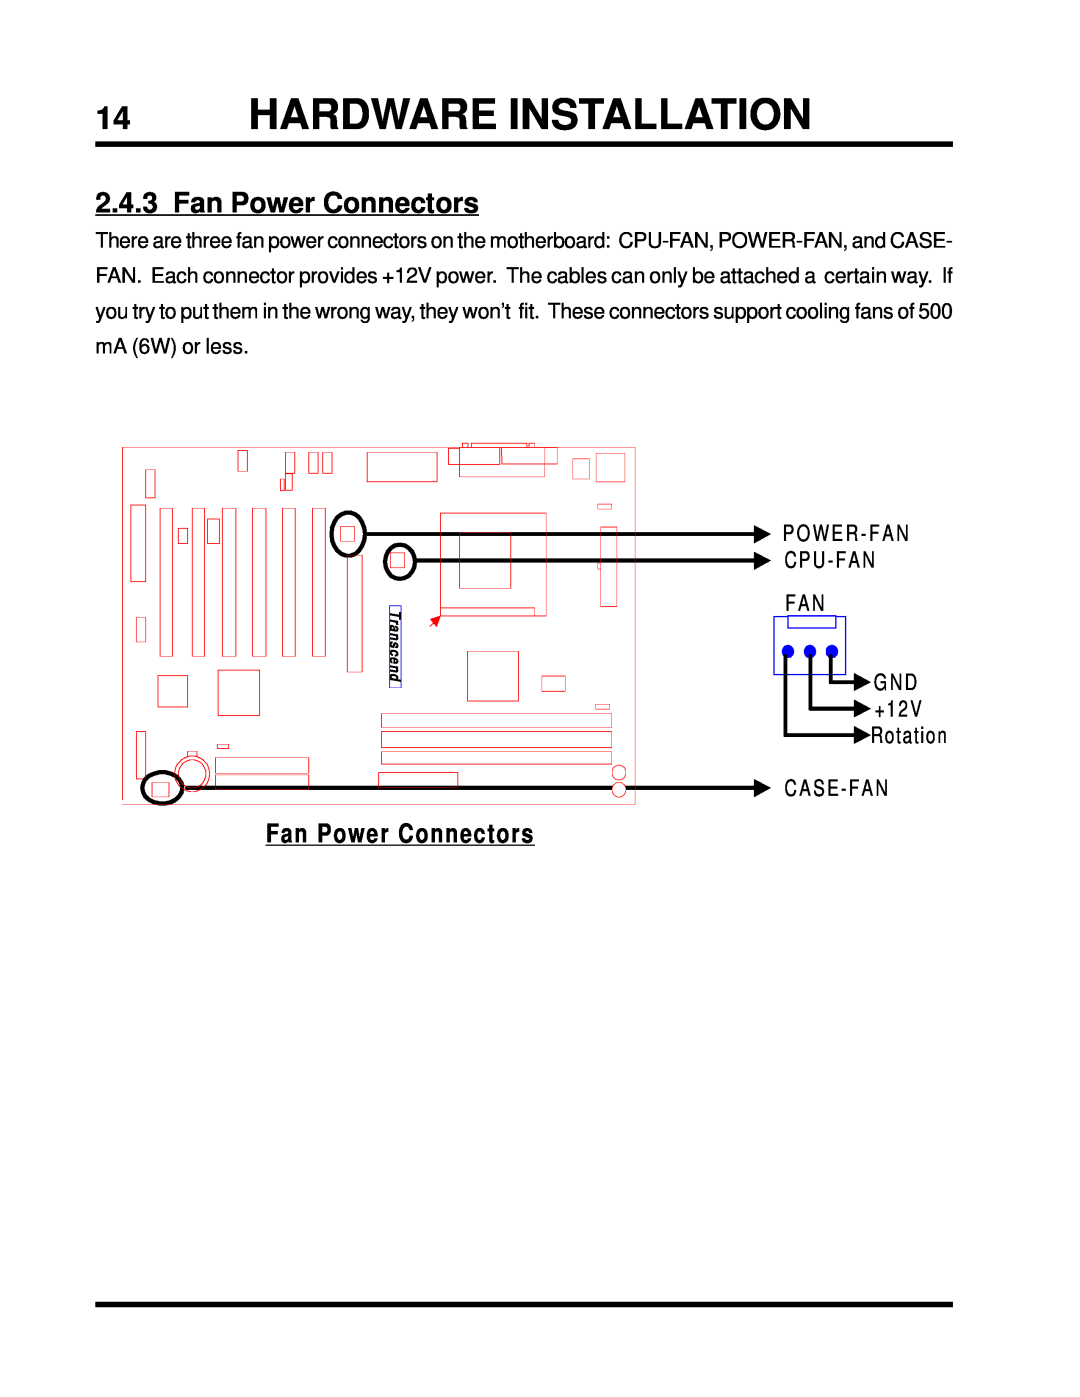 Intel TS-ASP3 user manual Hardware Installation, Fan Power Connectors, P O W E R - F A N C P U - F A N F A N G N D 